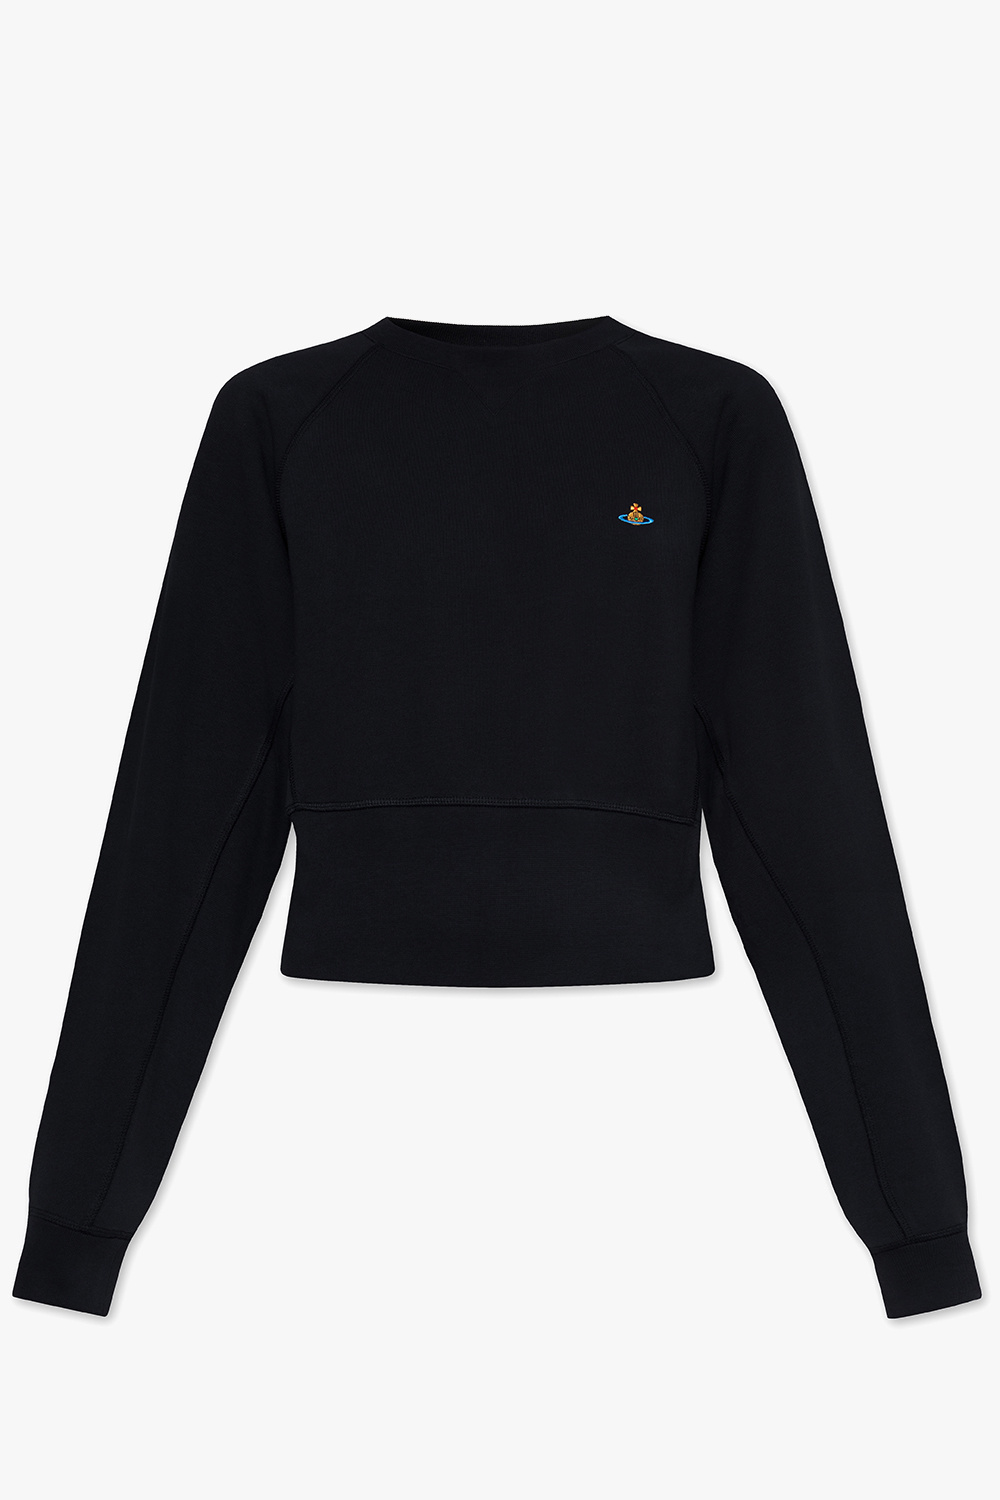 Vivienne Westwood adidas sweatshirt with logo